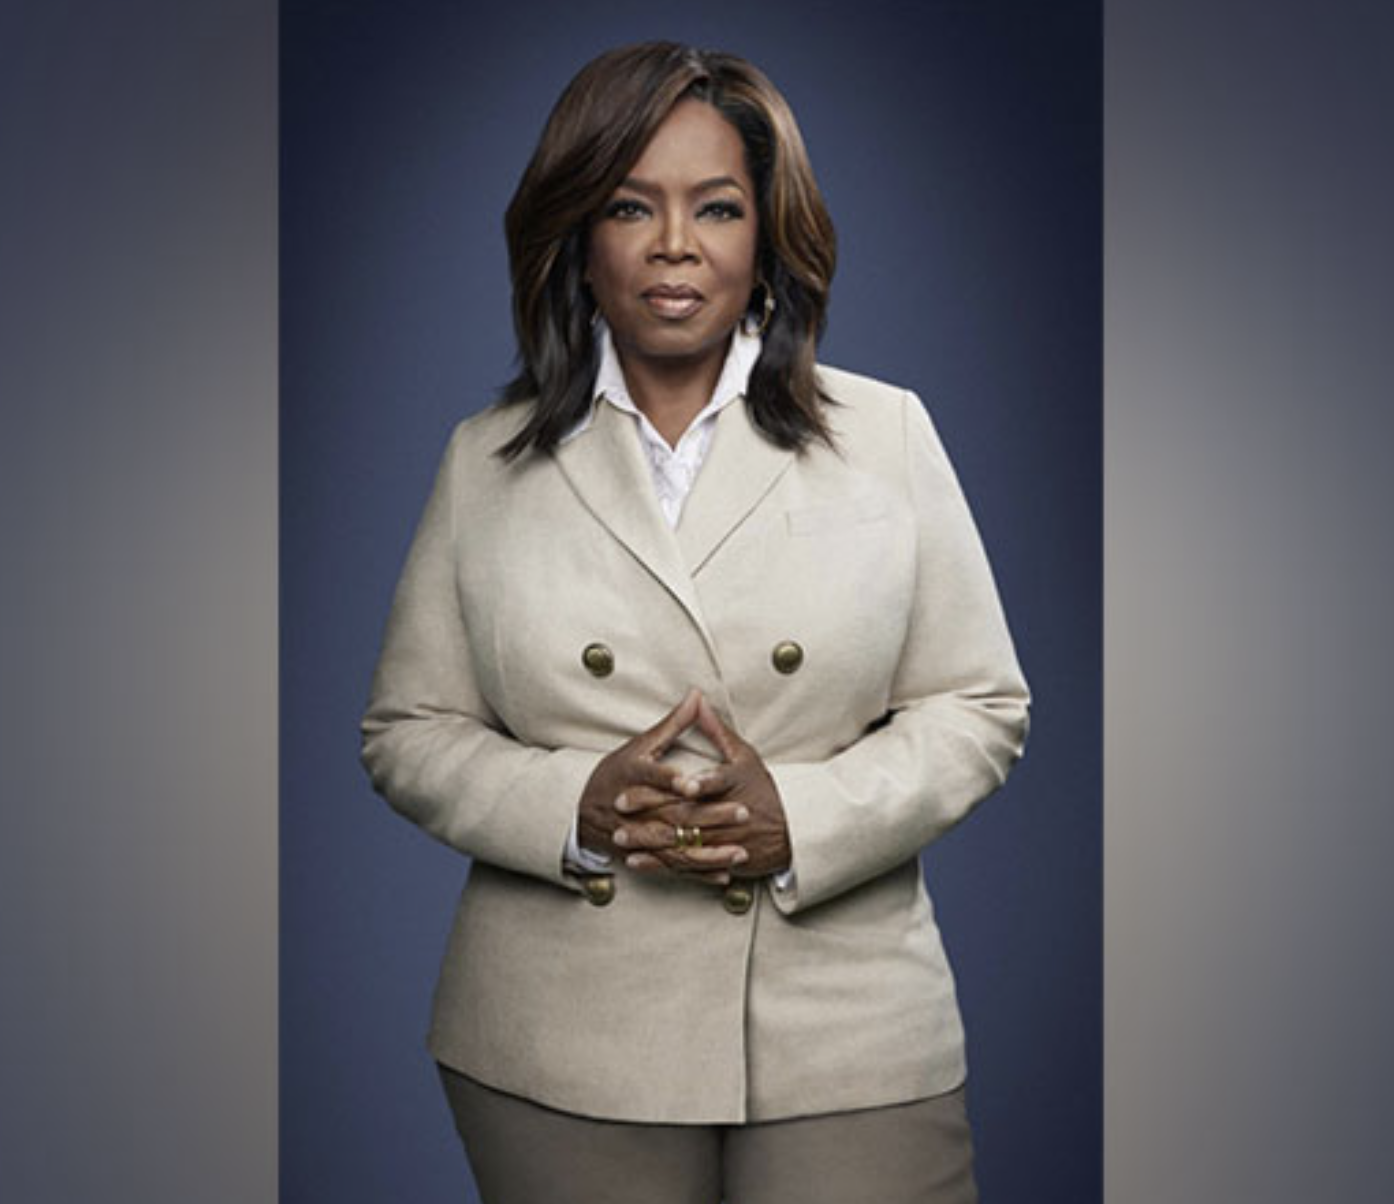 &quotI should be shamed": Oprah Winfrey recalls how she felt after Joan Rivers